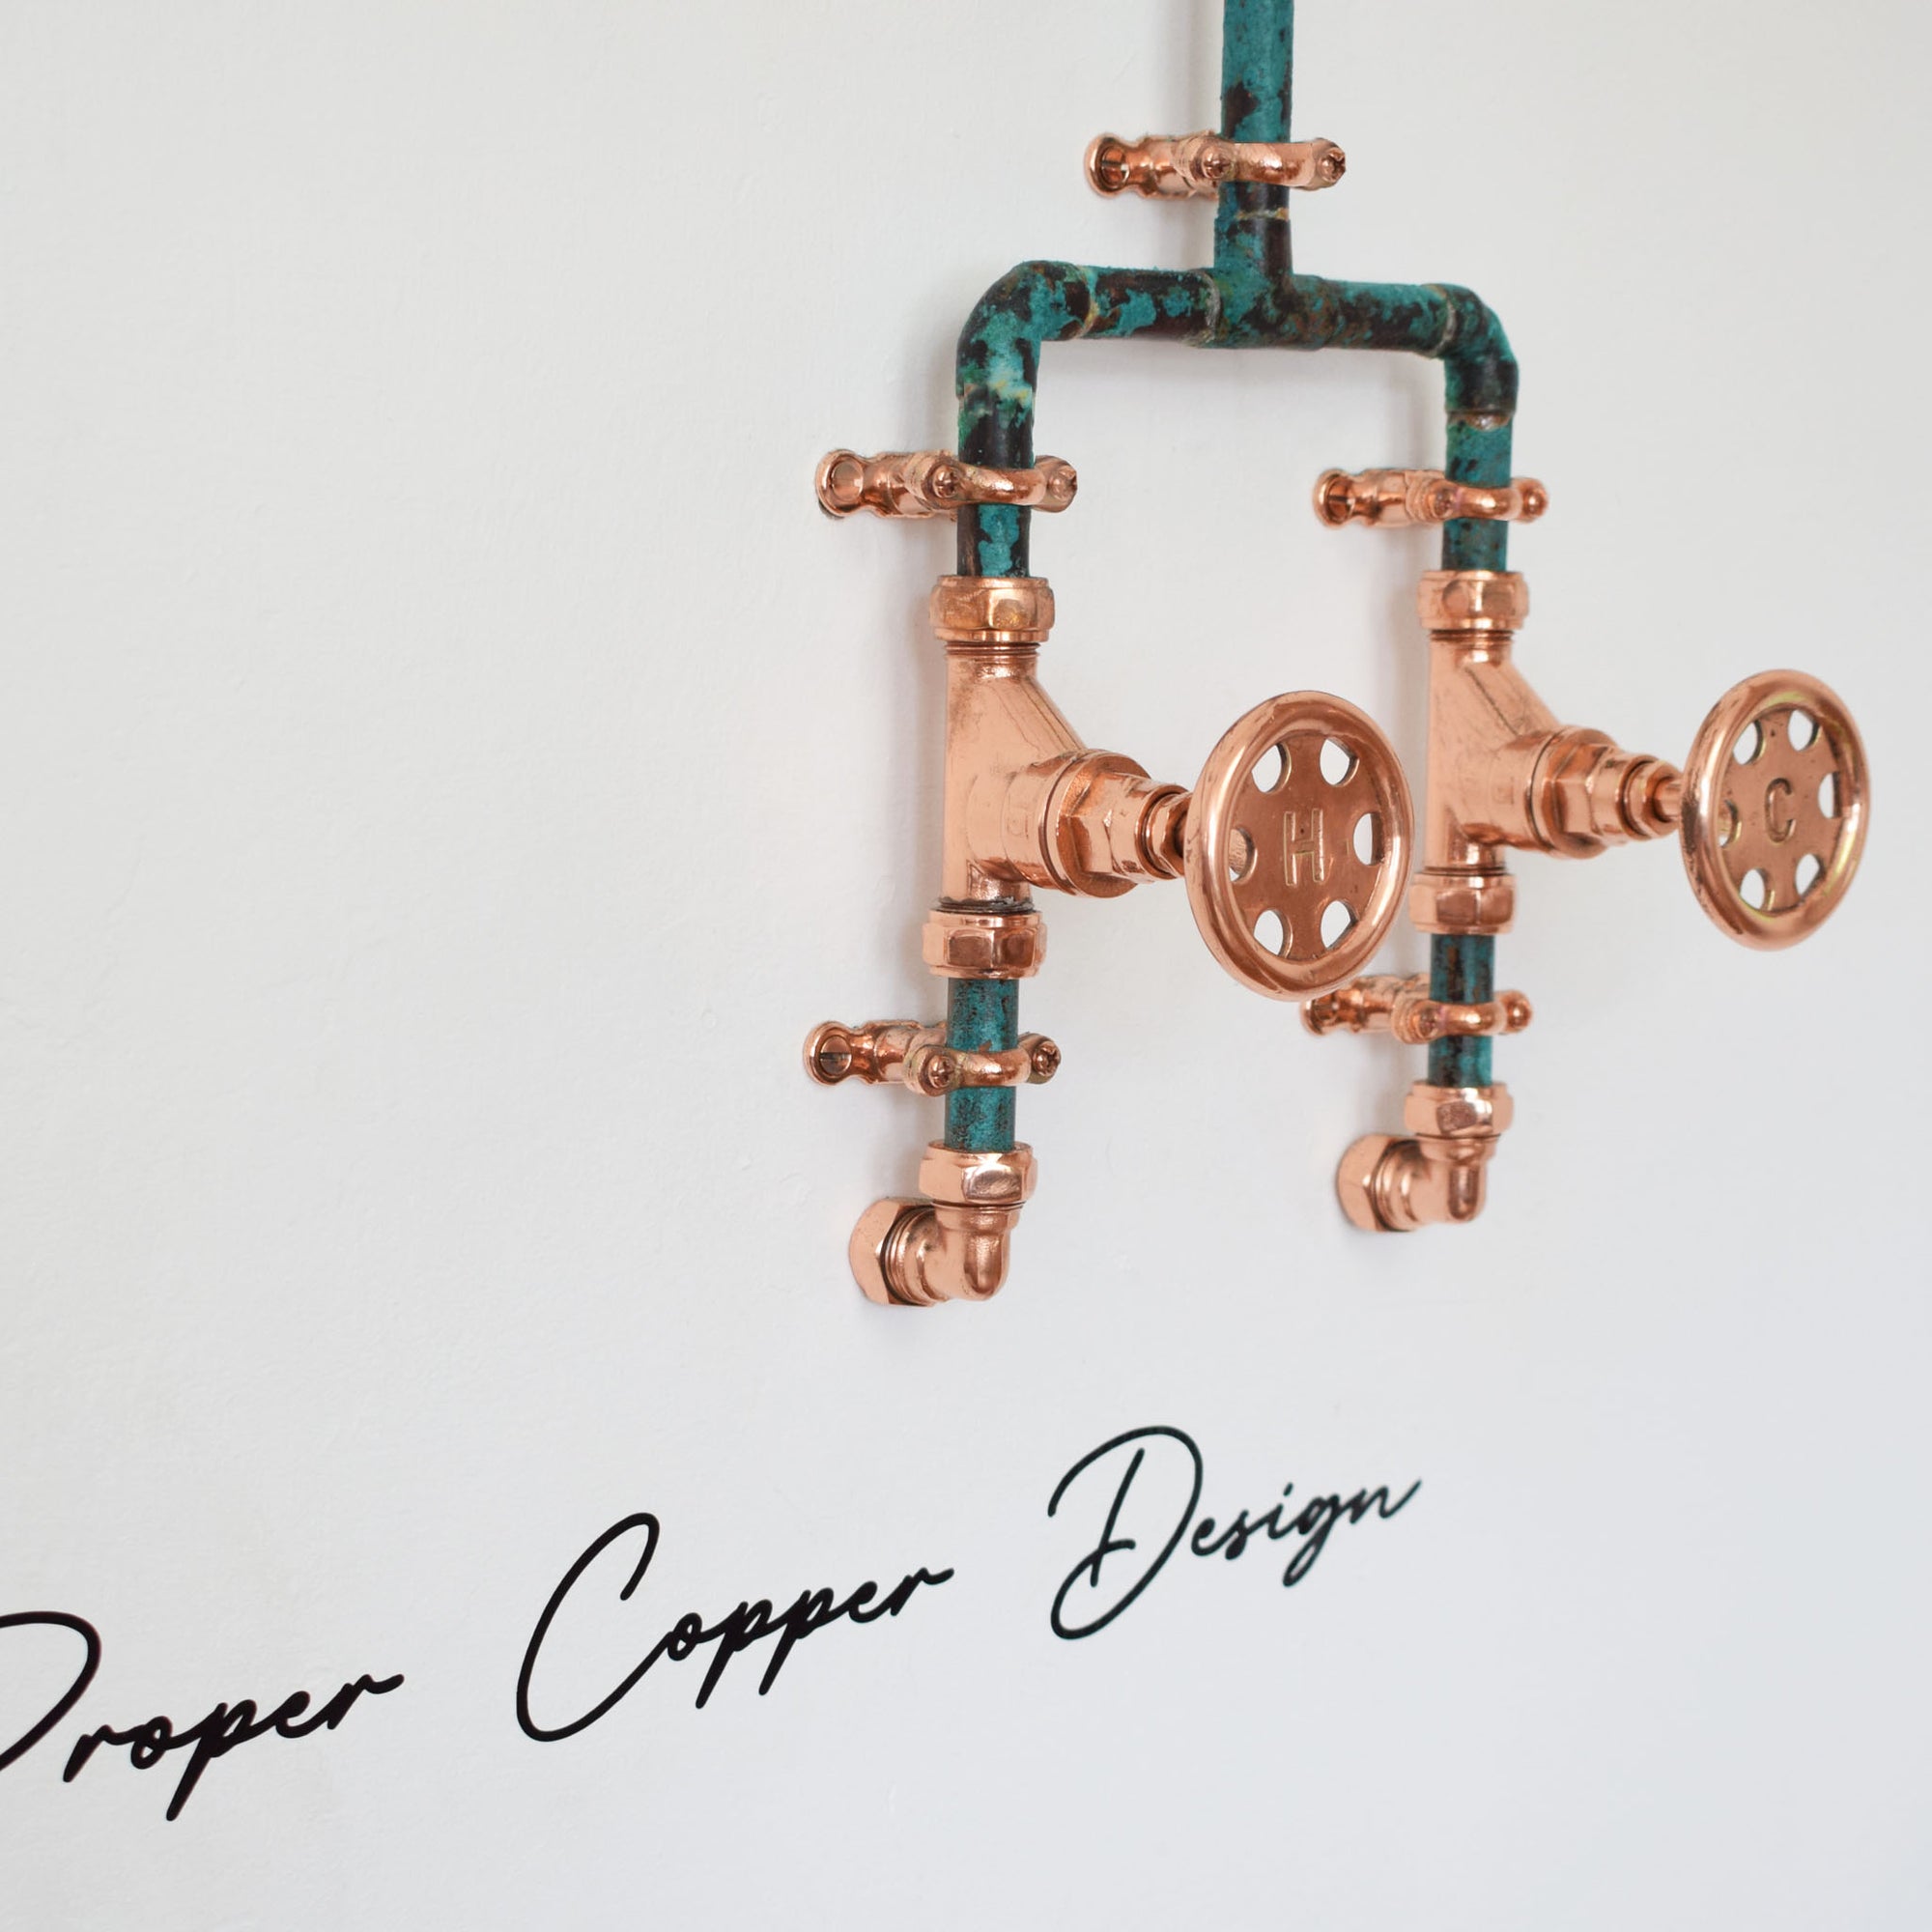 stylish copper shower close up image of the Verdigris finish